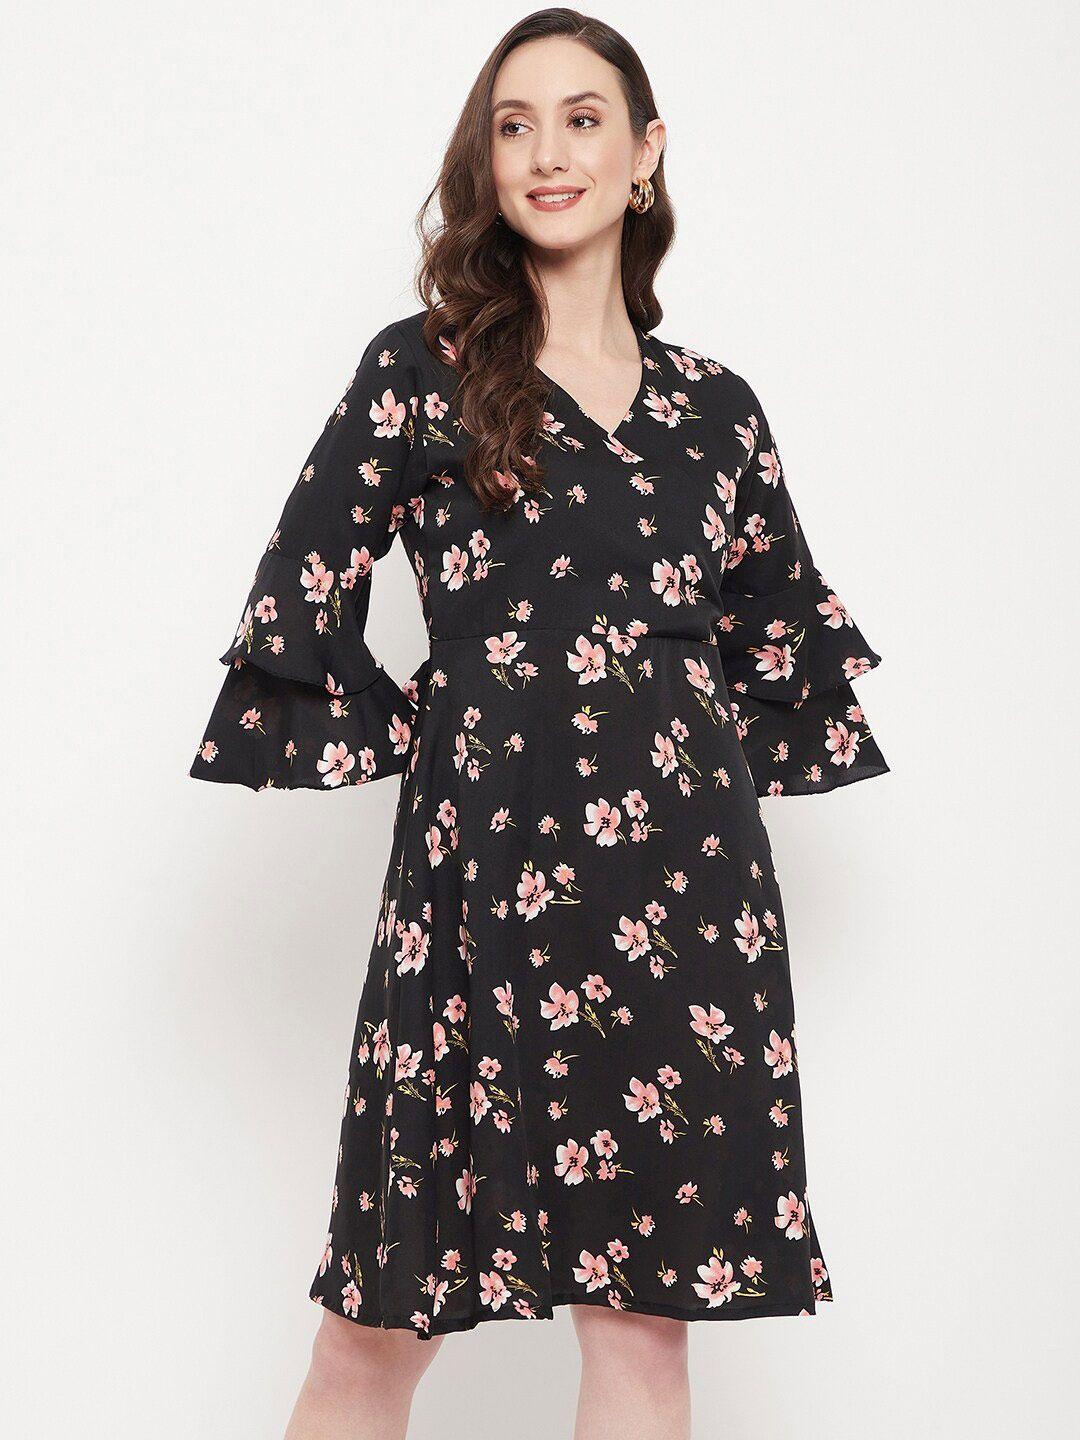 uptownie-lite-floral-printed-a-line-dress